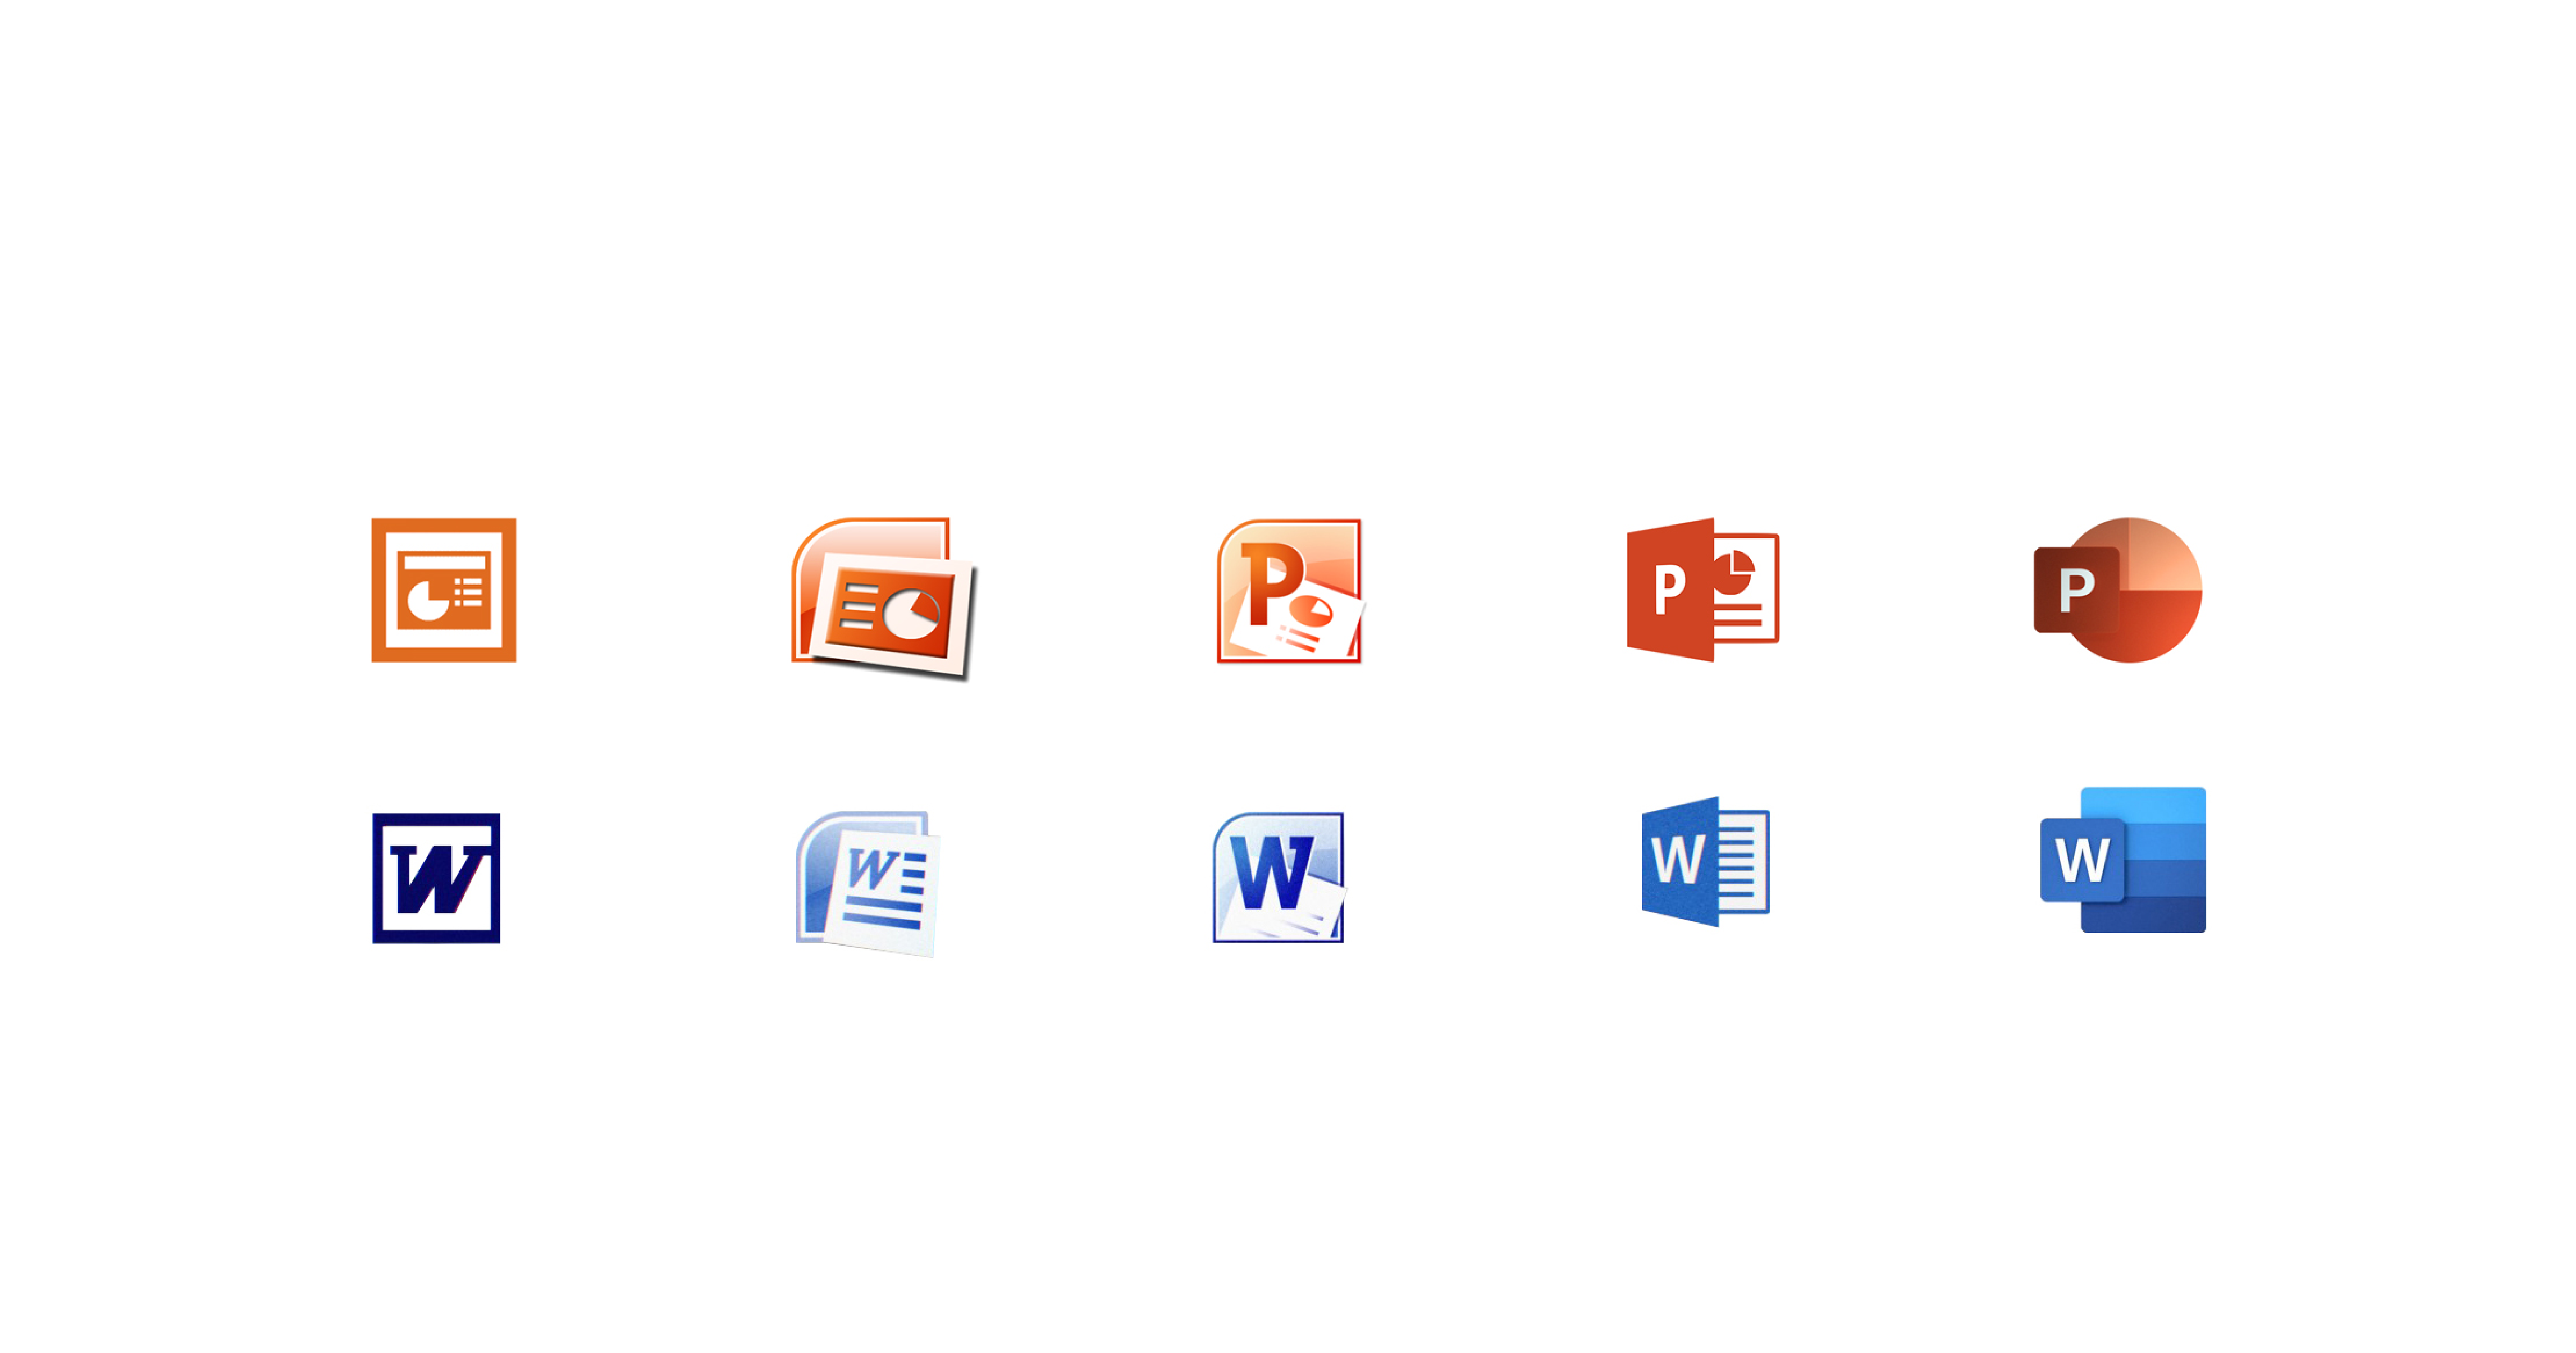 Thiết kế logo Microsoft Office qua từng thời kỳ 